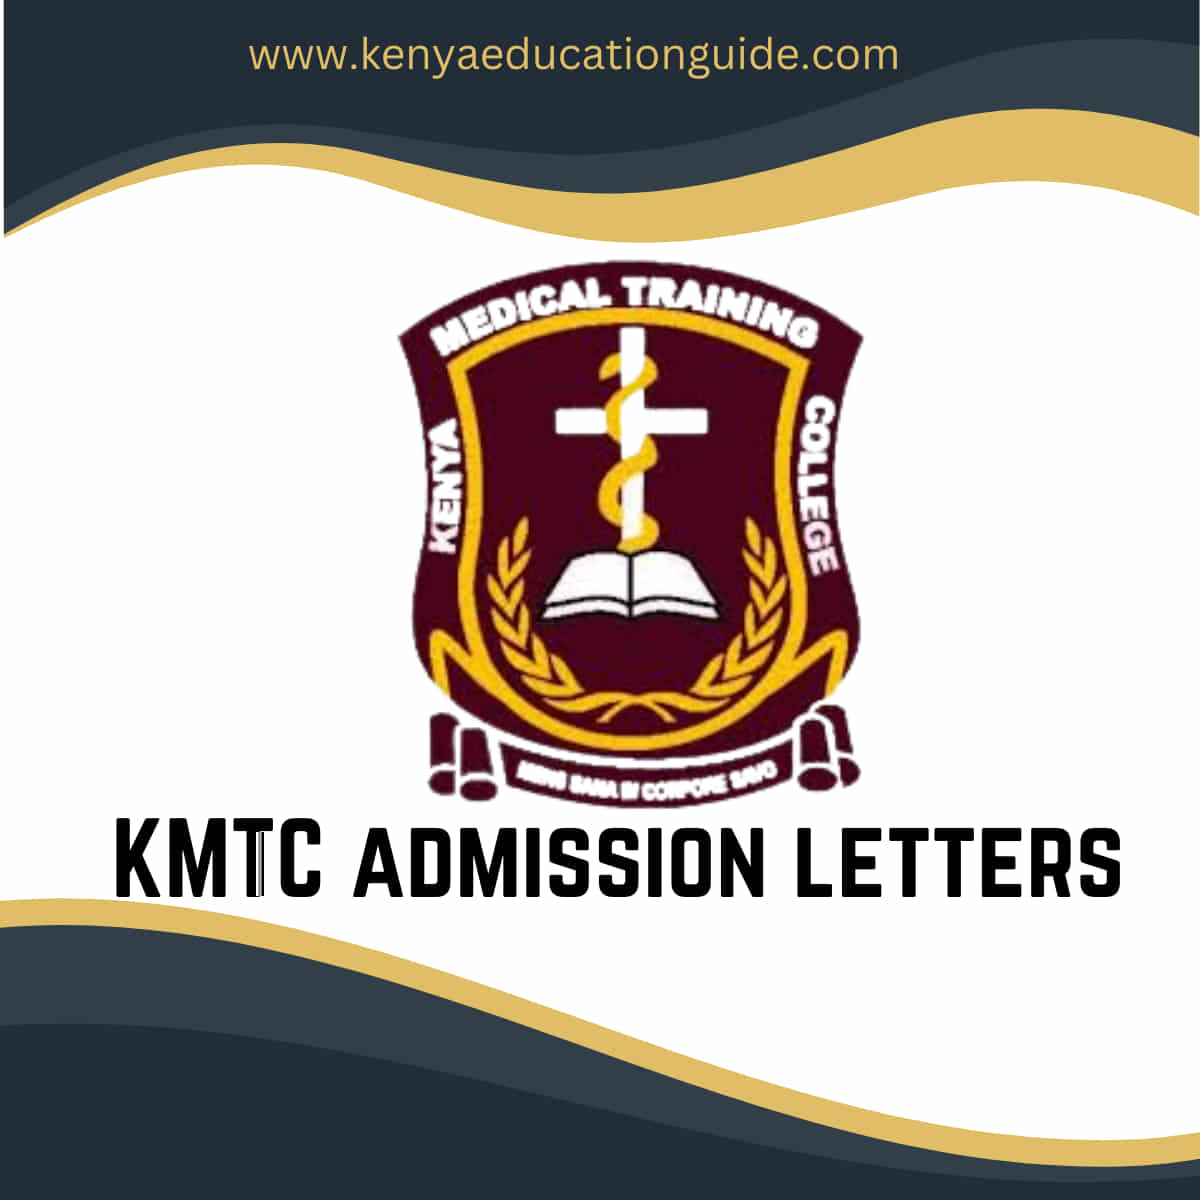 KMTC admission letters